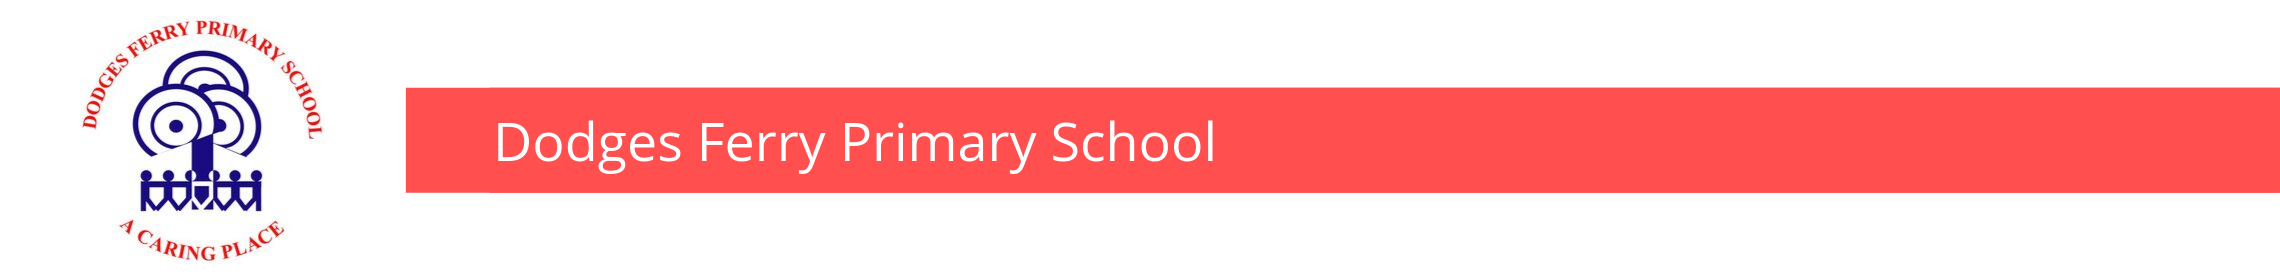 Dodges Ferry Primary School Banner